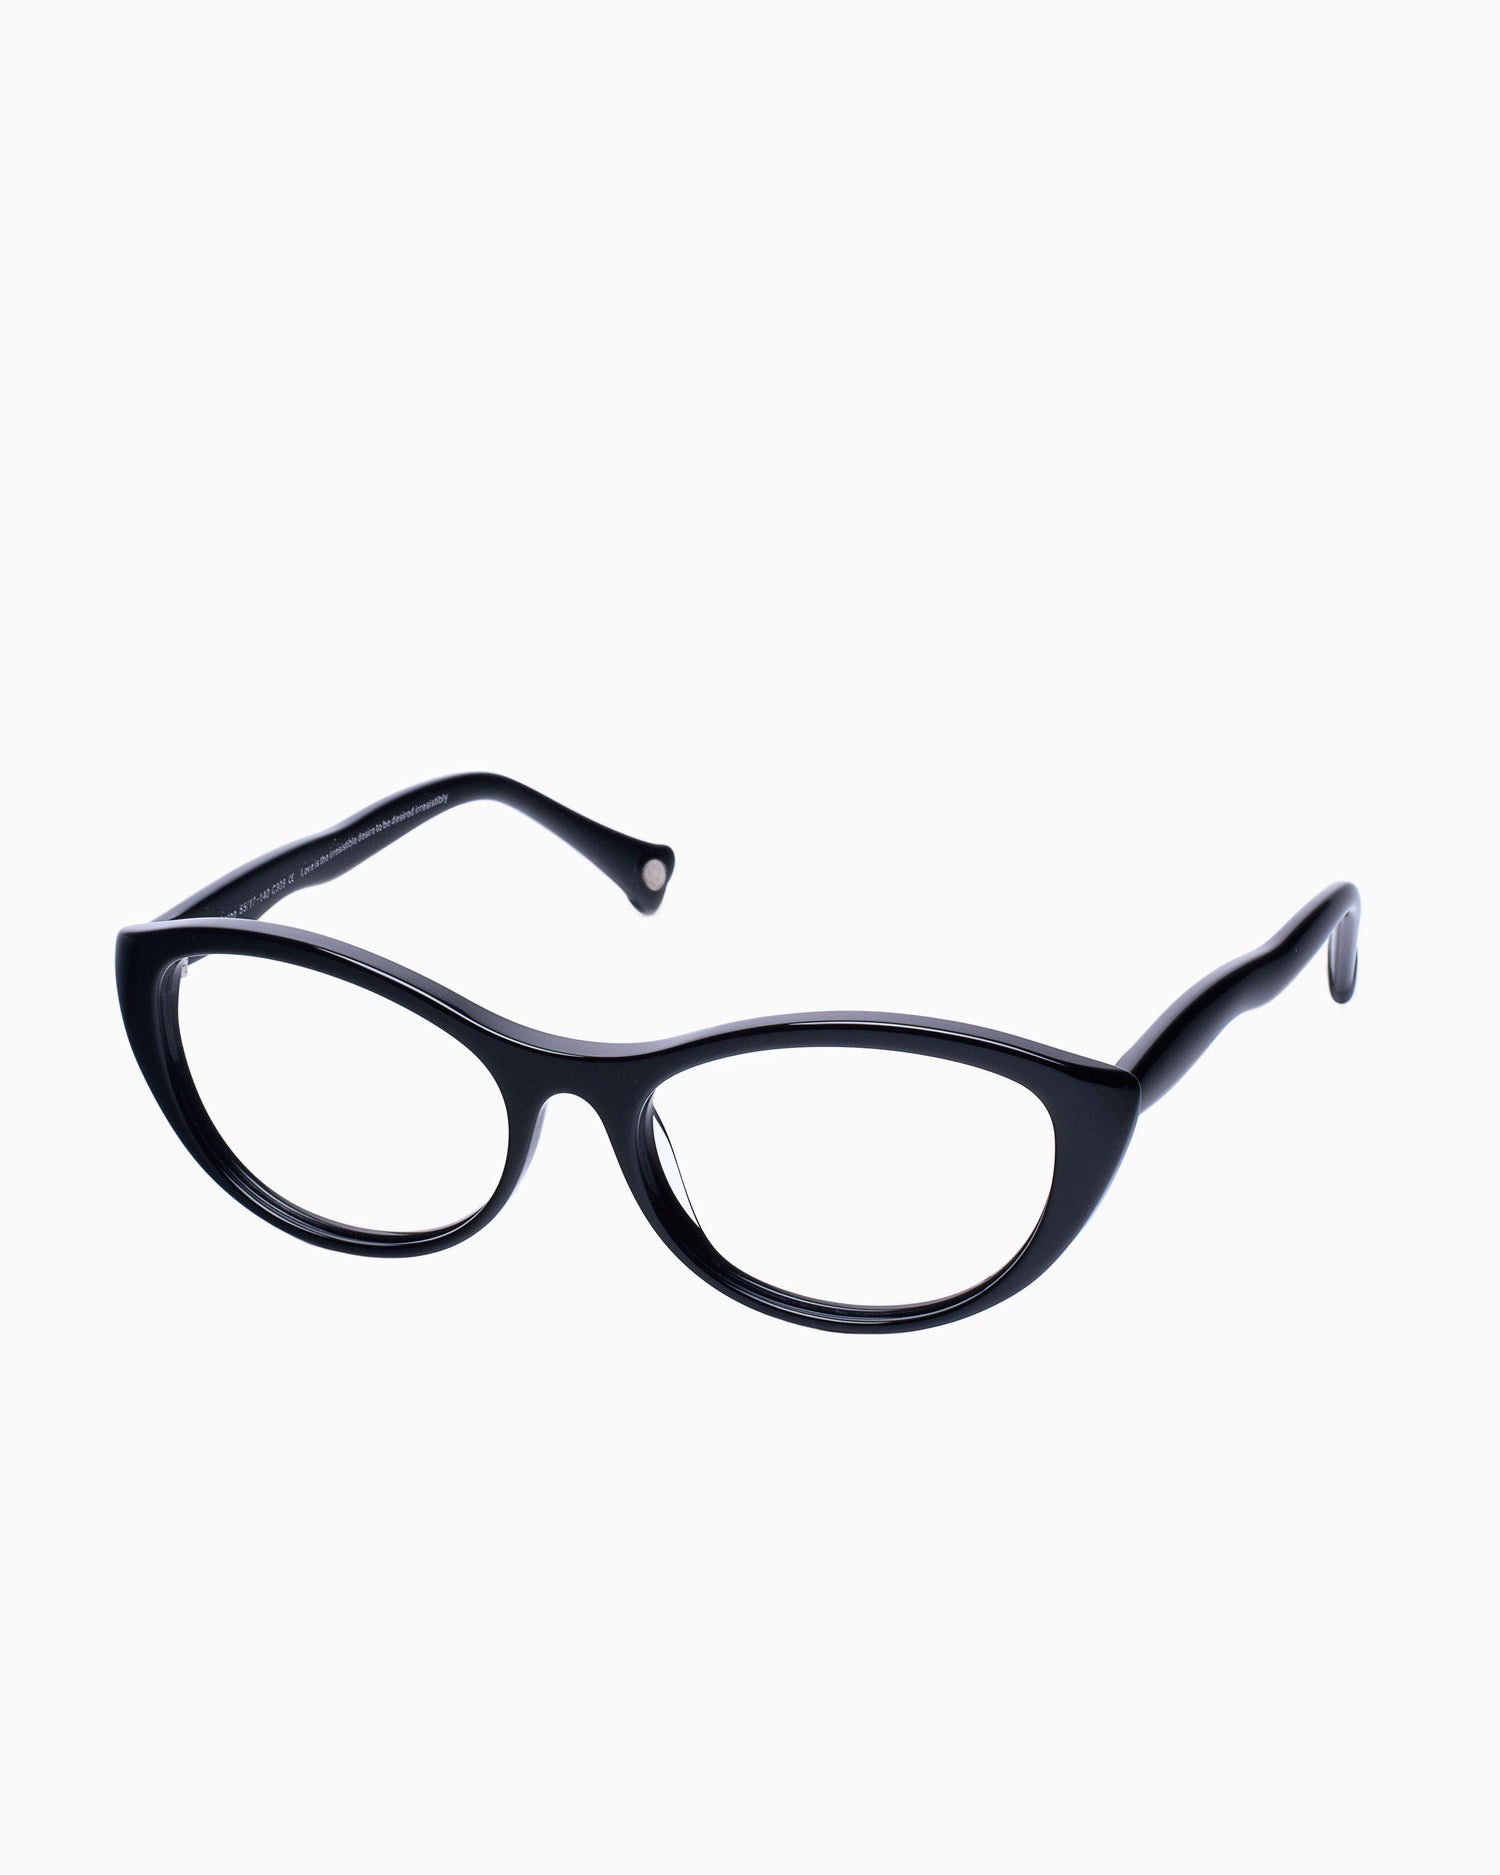 Spectacleeyeworks - Golden - C306 | glasses bar:  Marie-Sophie Dion